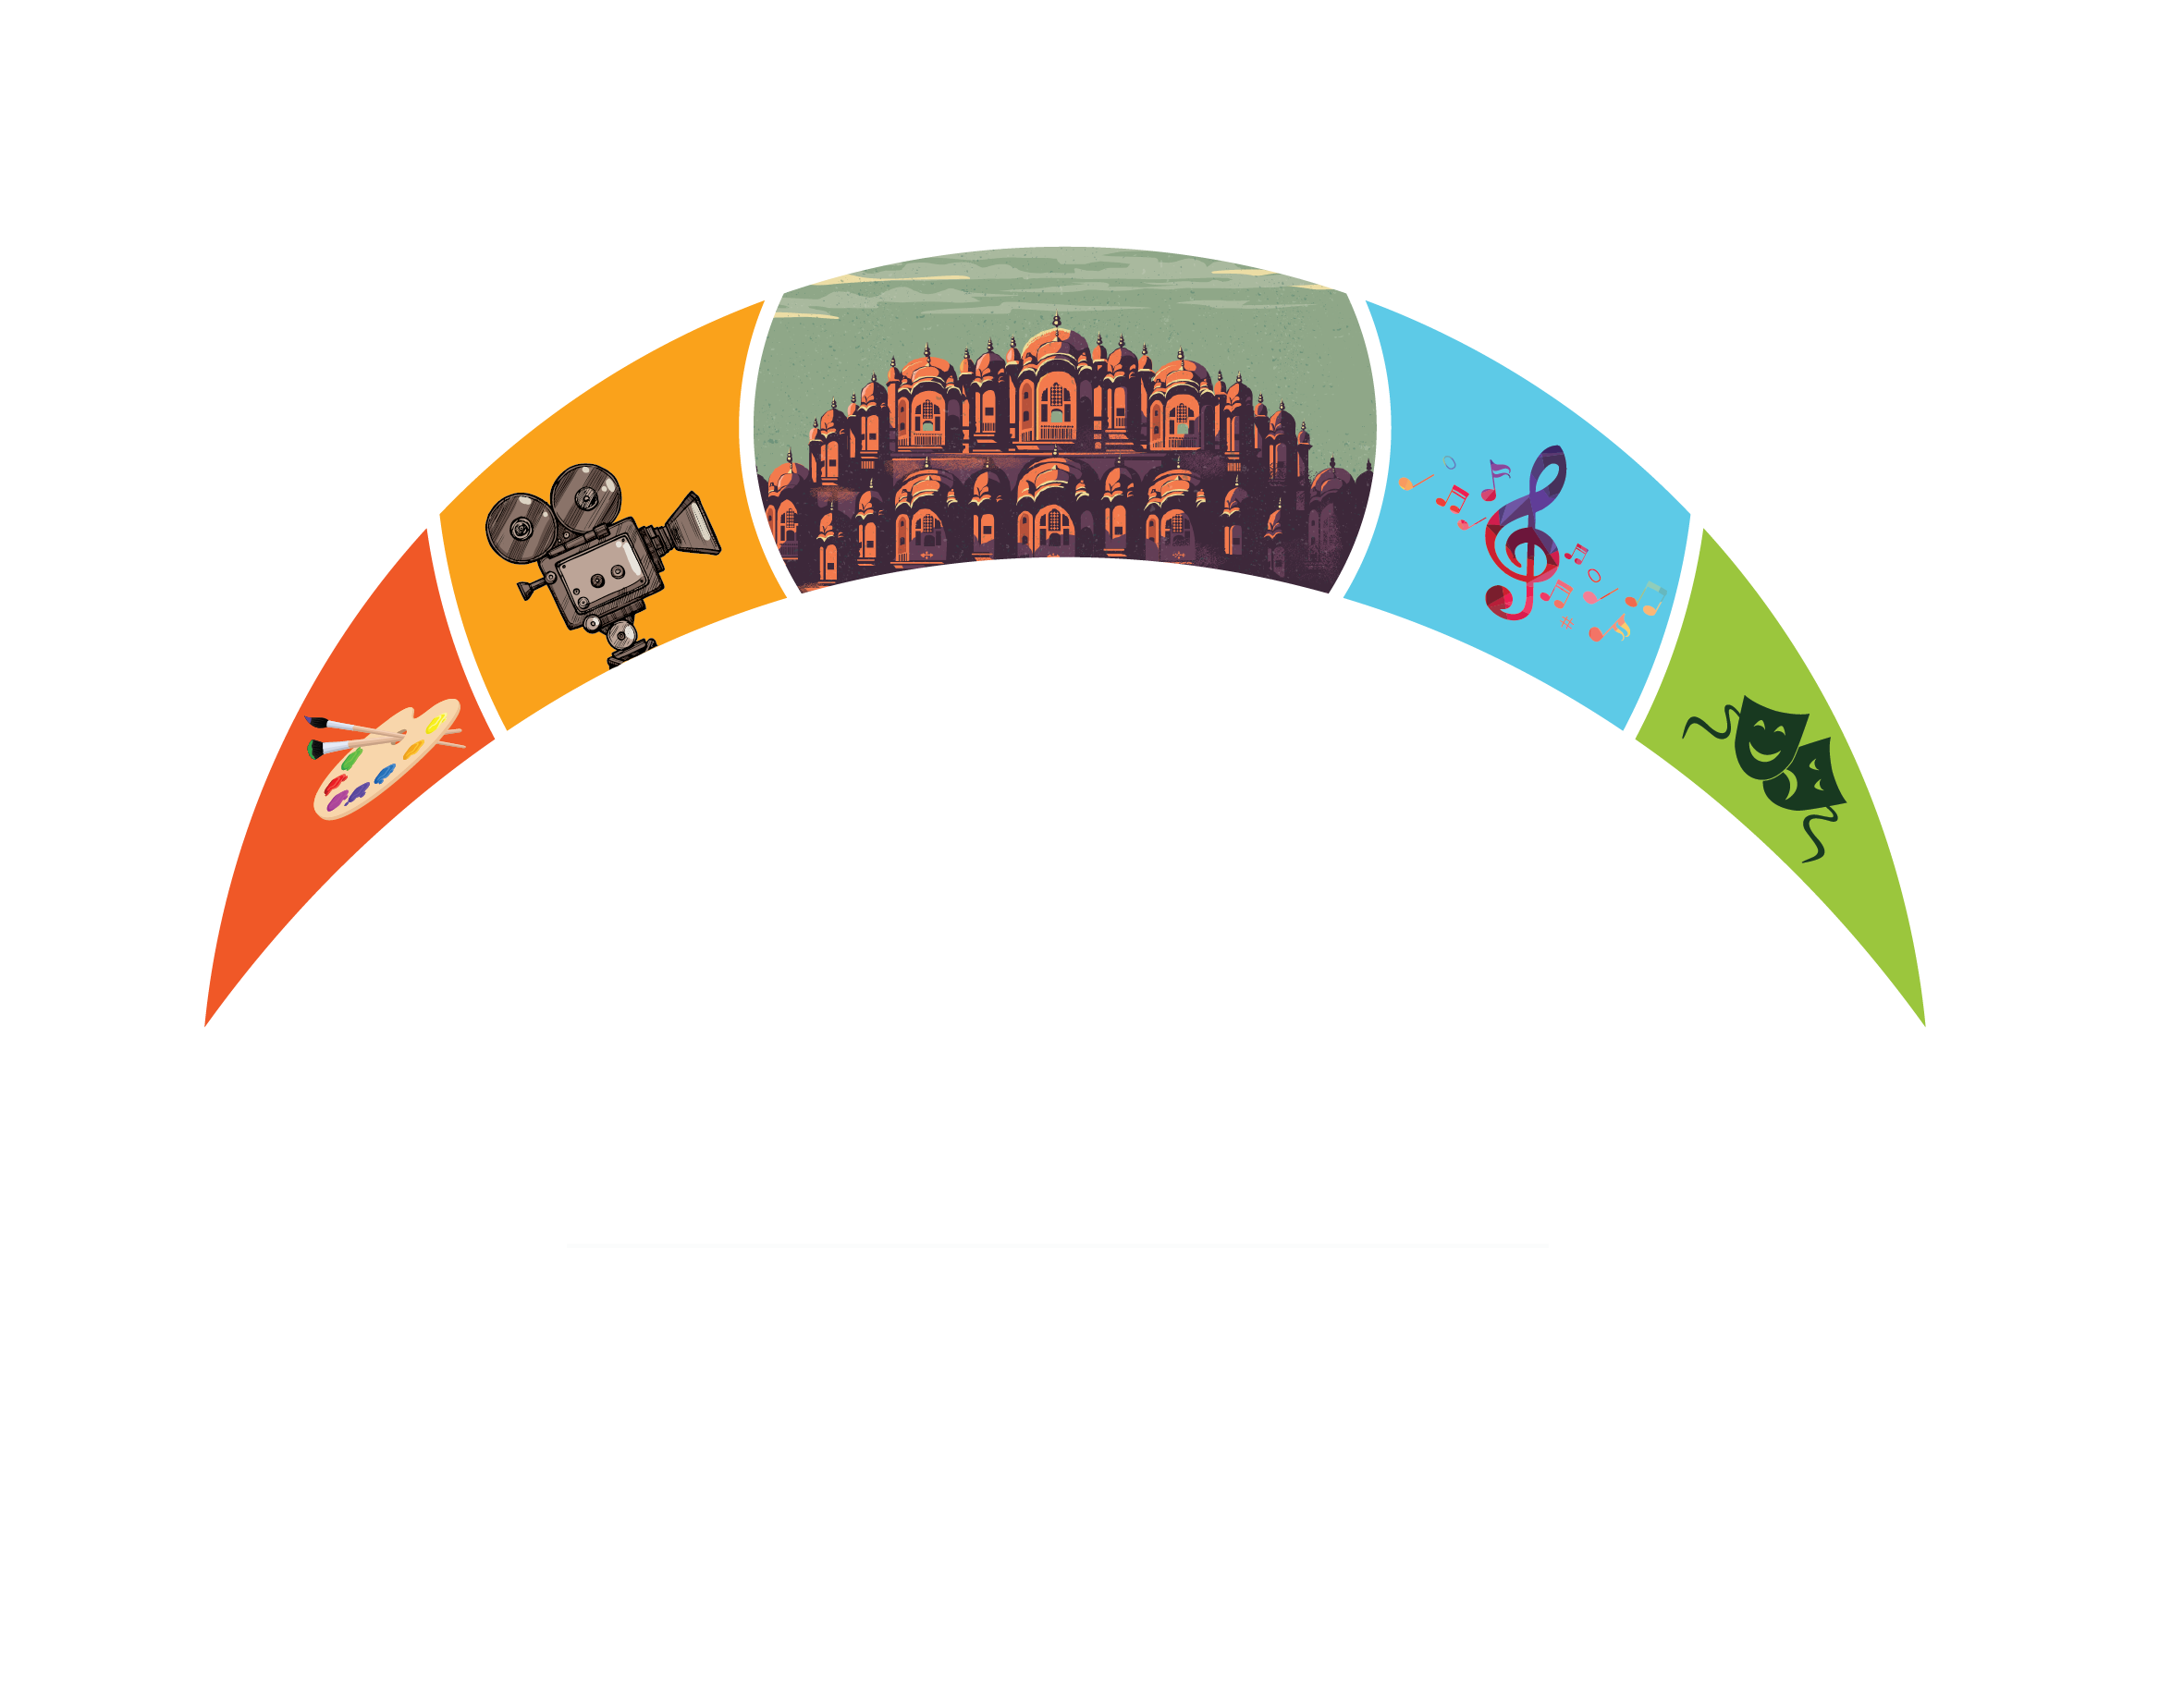 IACCF logo